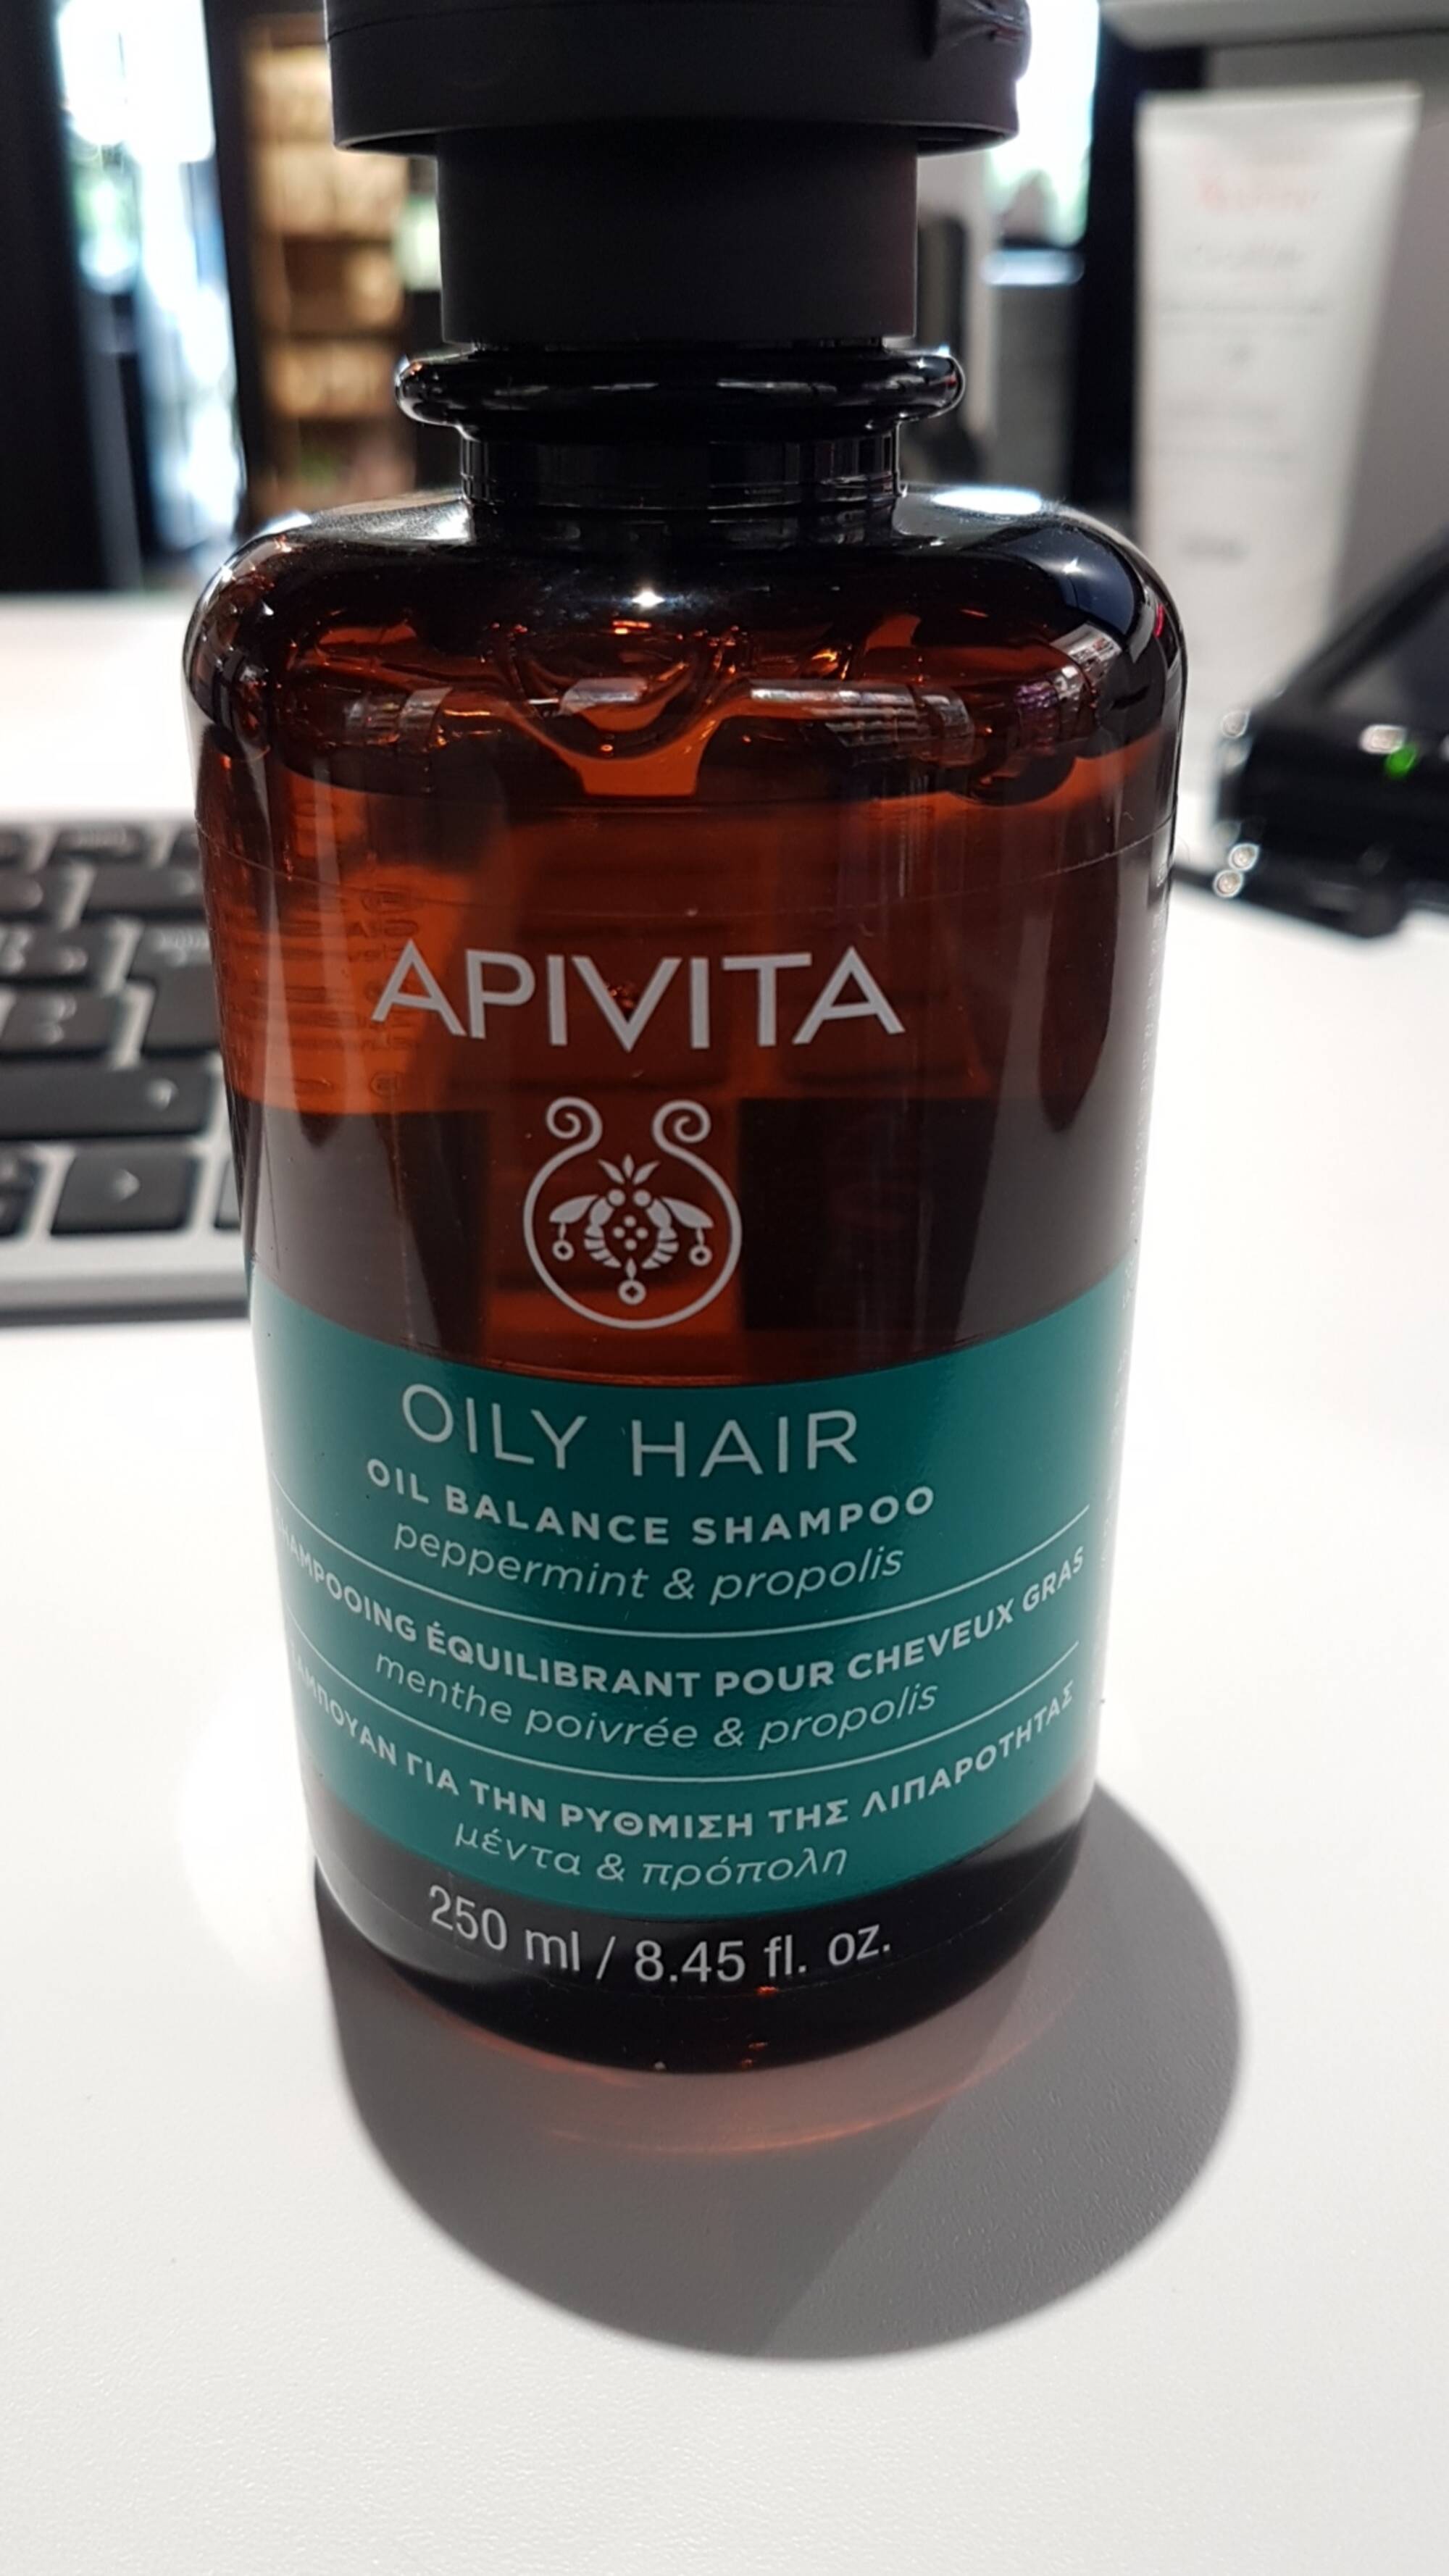 APIVITA - Oily hair - Shampooing équilibrant pour cheveux gras